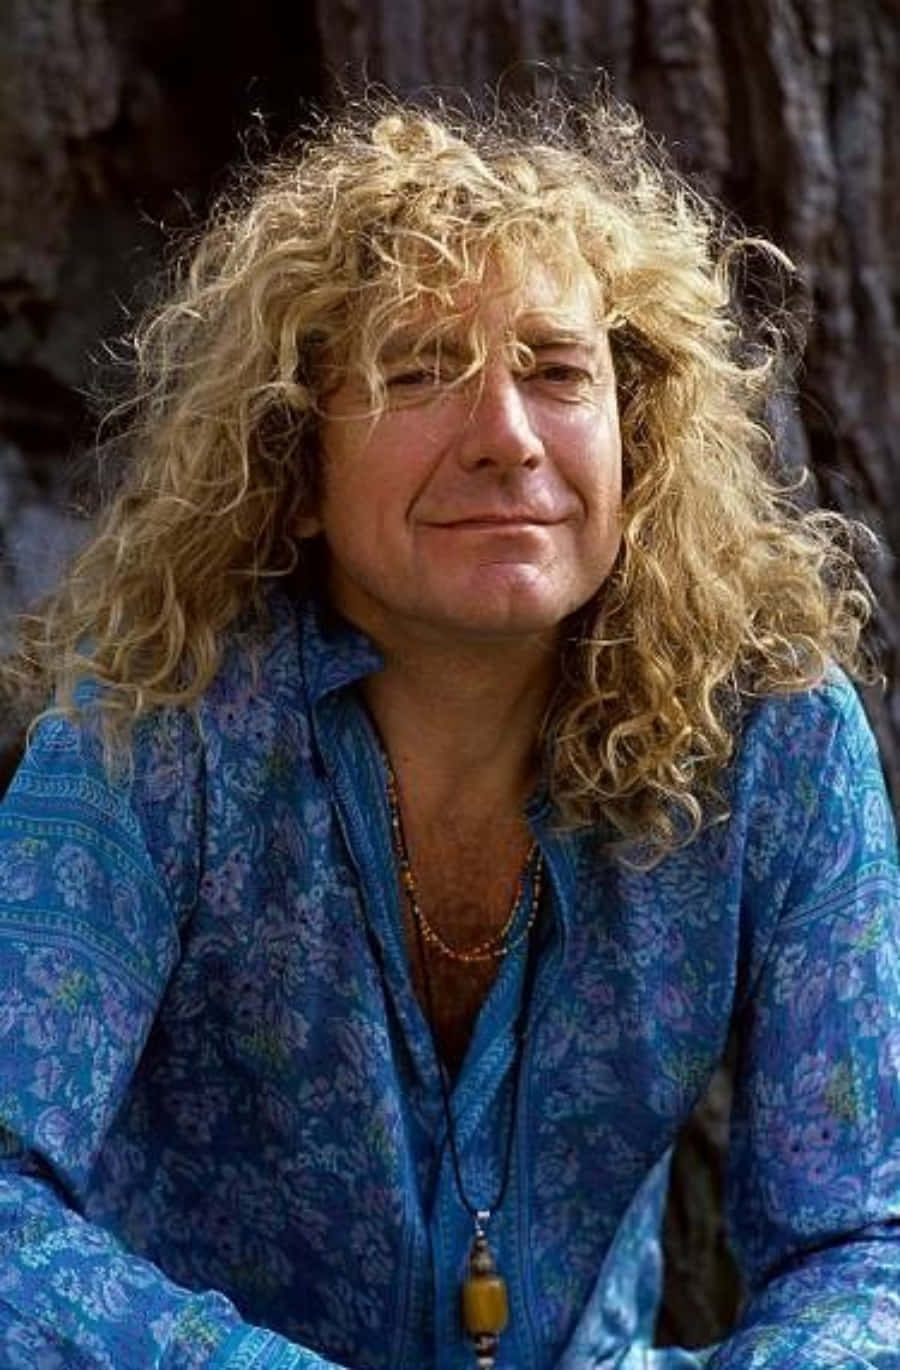 Legendary Led Zeppelin frontman Robert Plant